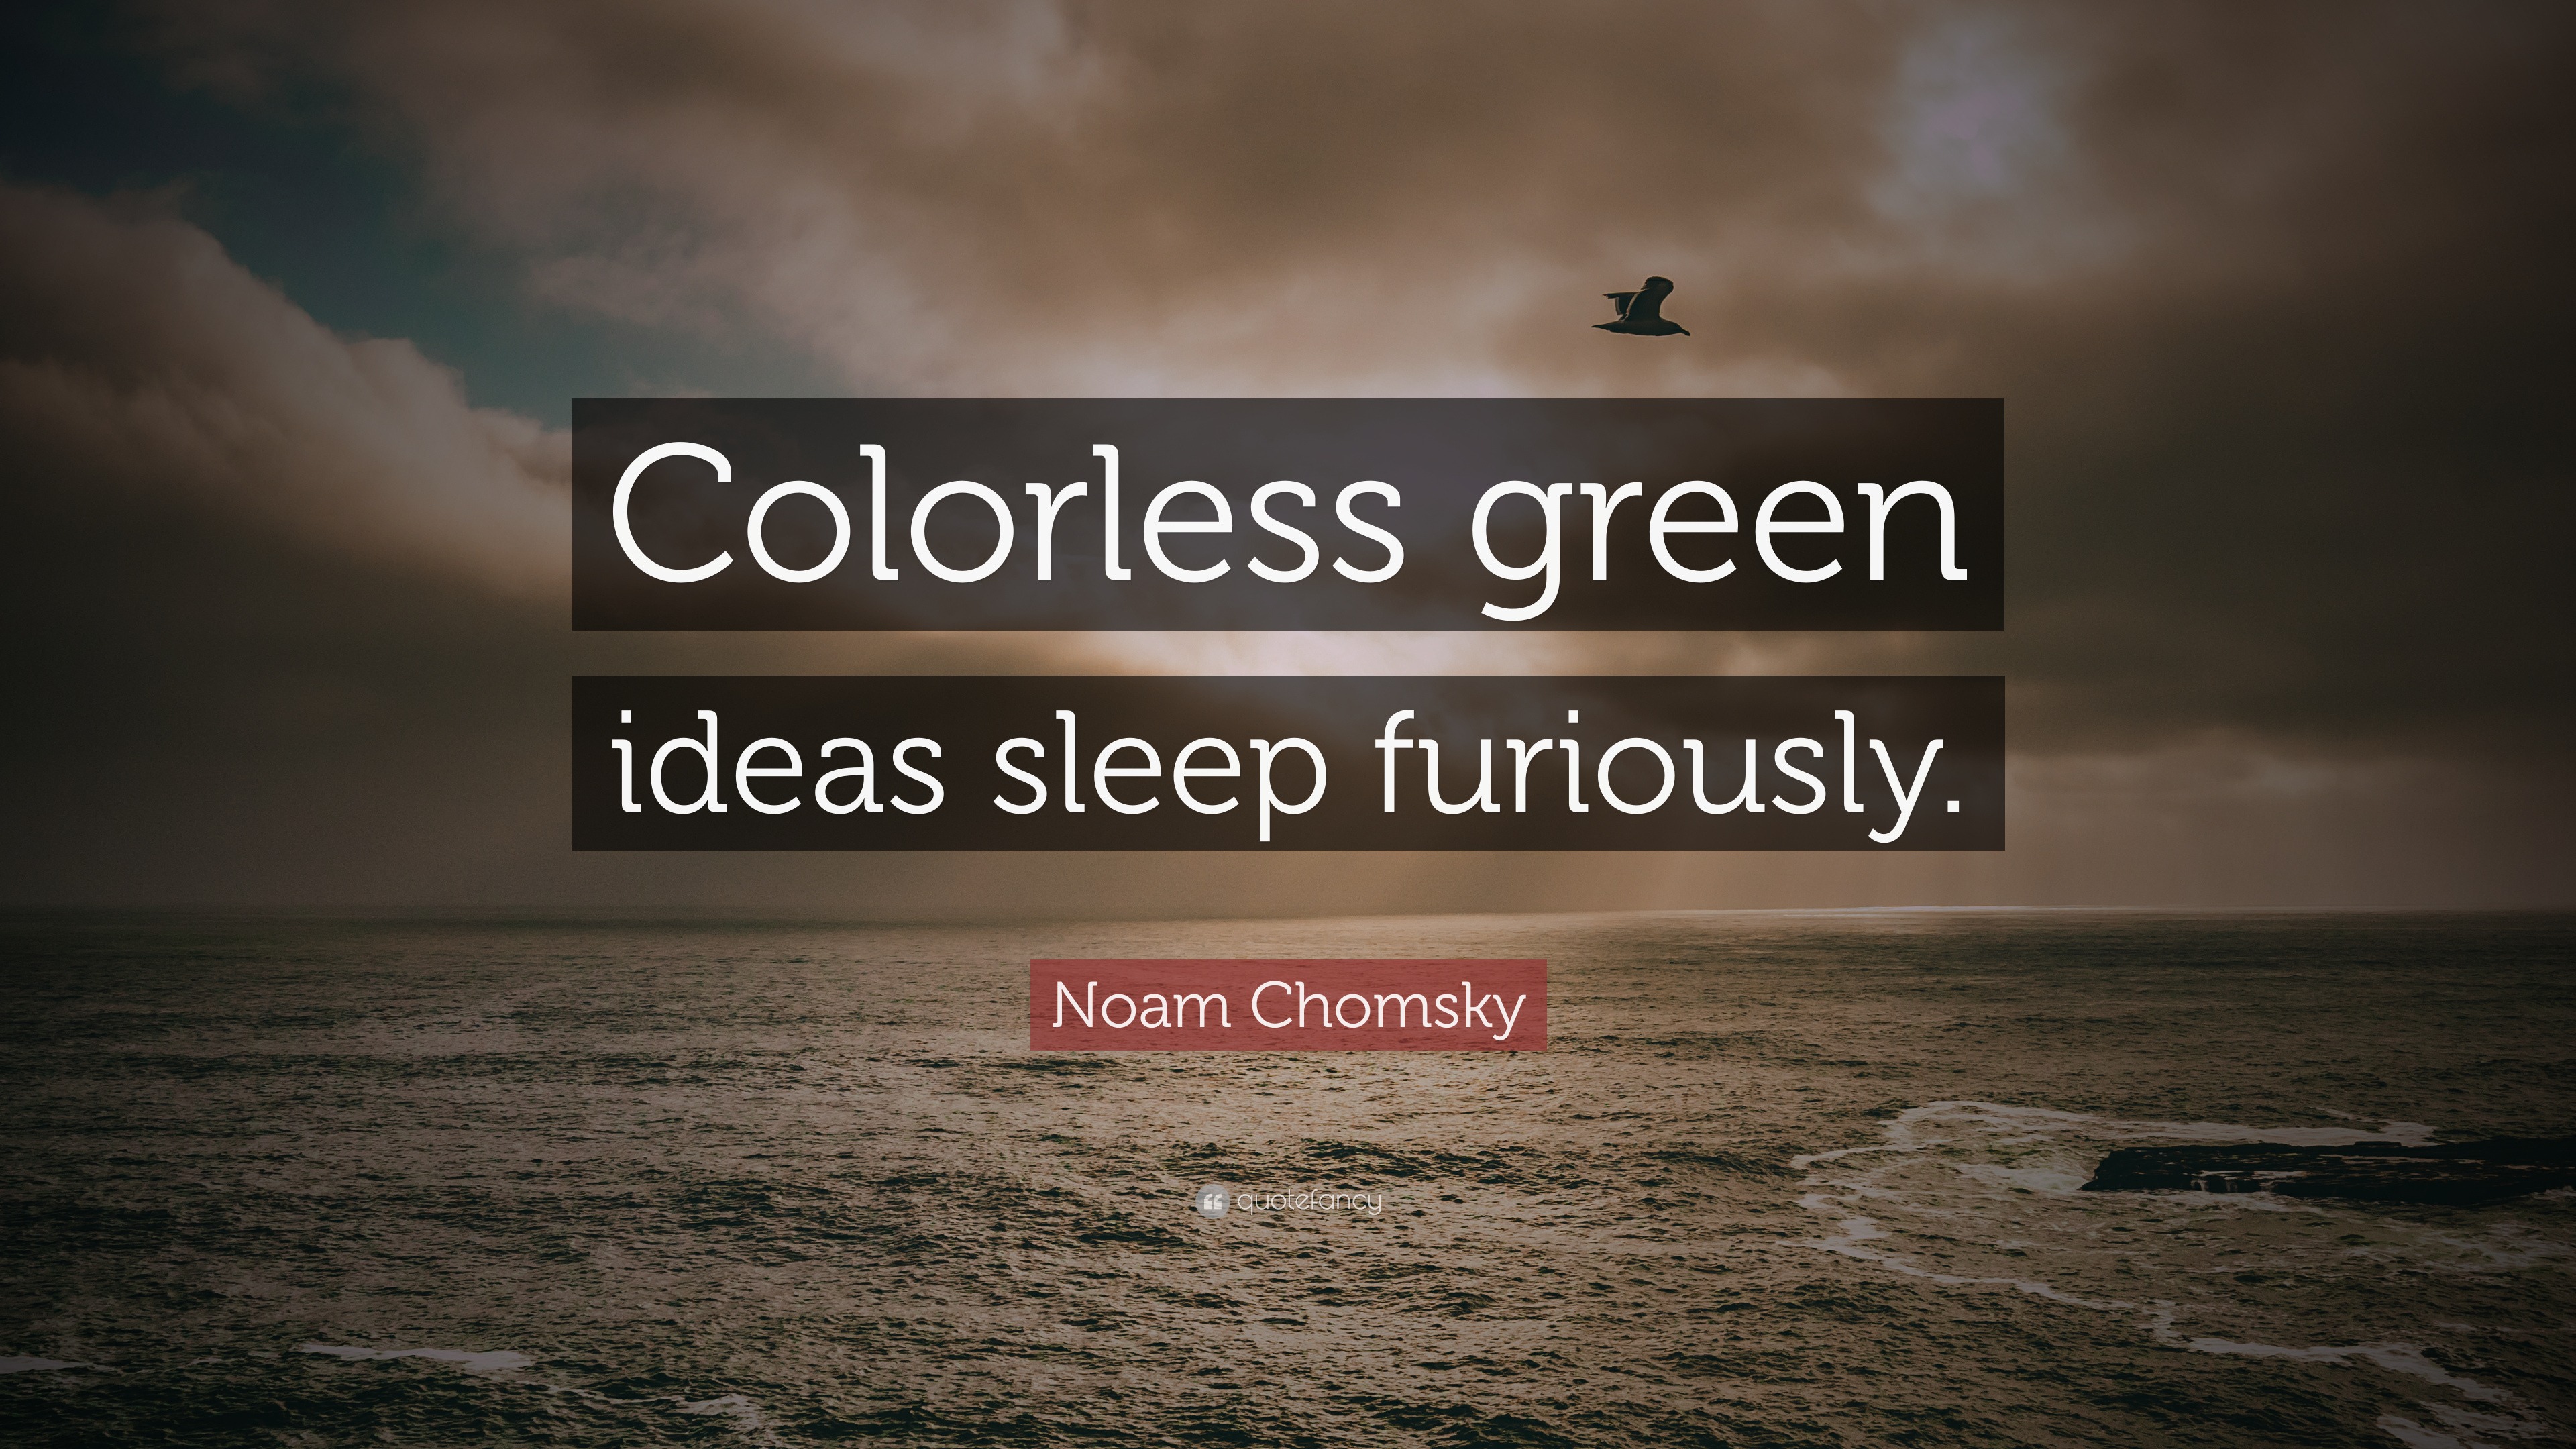 “Colorless green ideas sleep furiously.”